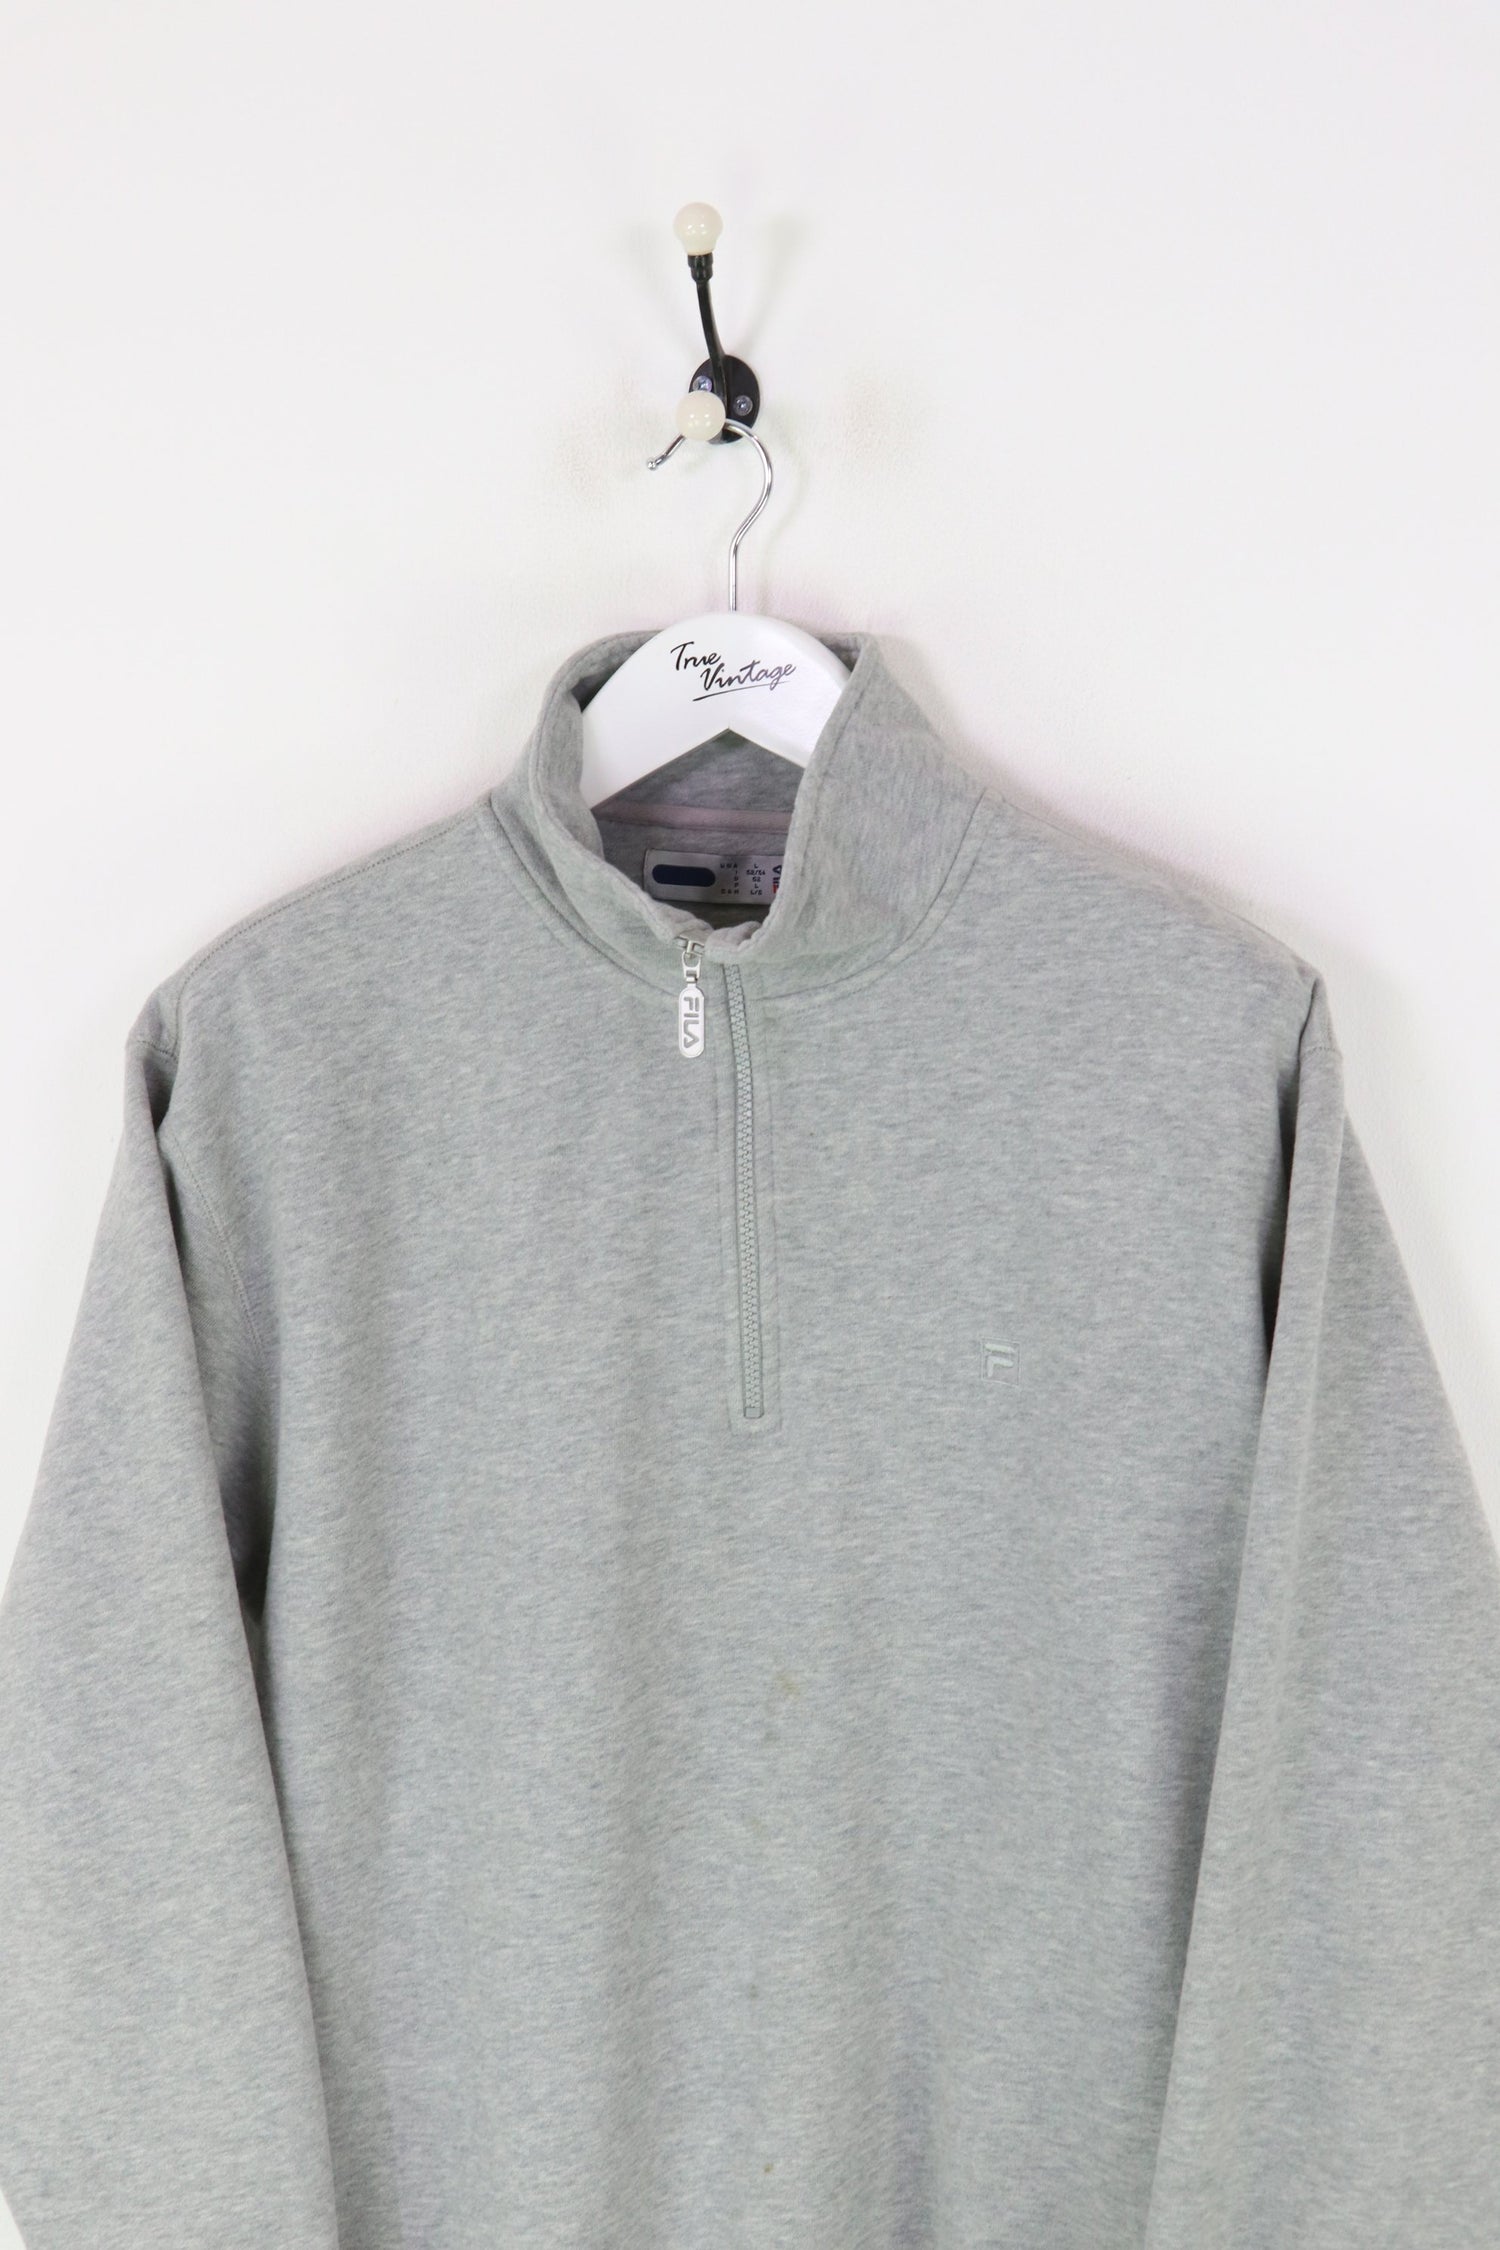 Fila 1/4 Zip Sweatshirt Grey Large